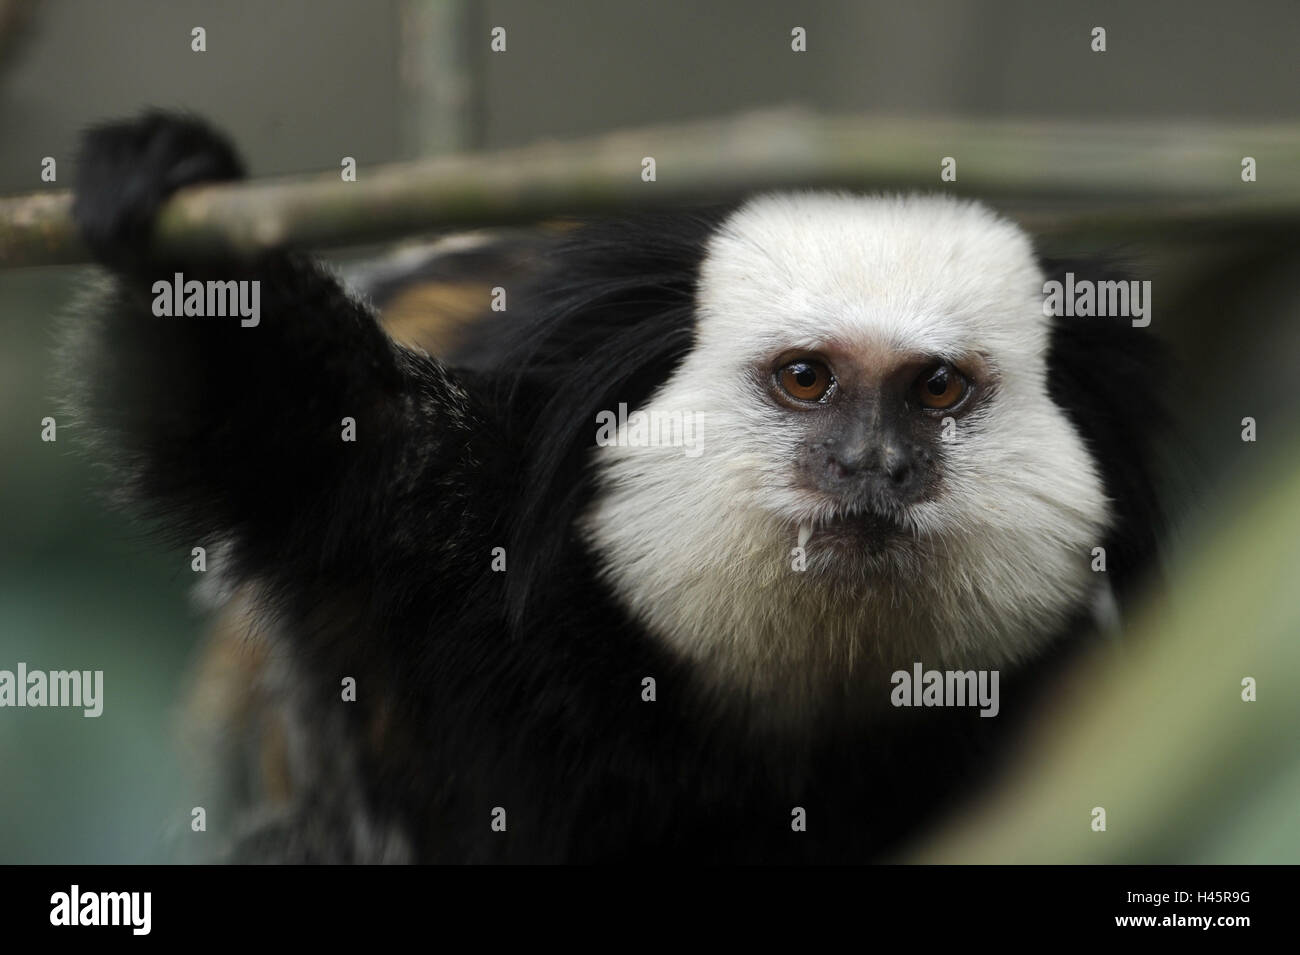 White head bundle monkey, Callithrix geoffroyi, portrait, Stock Photo